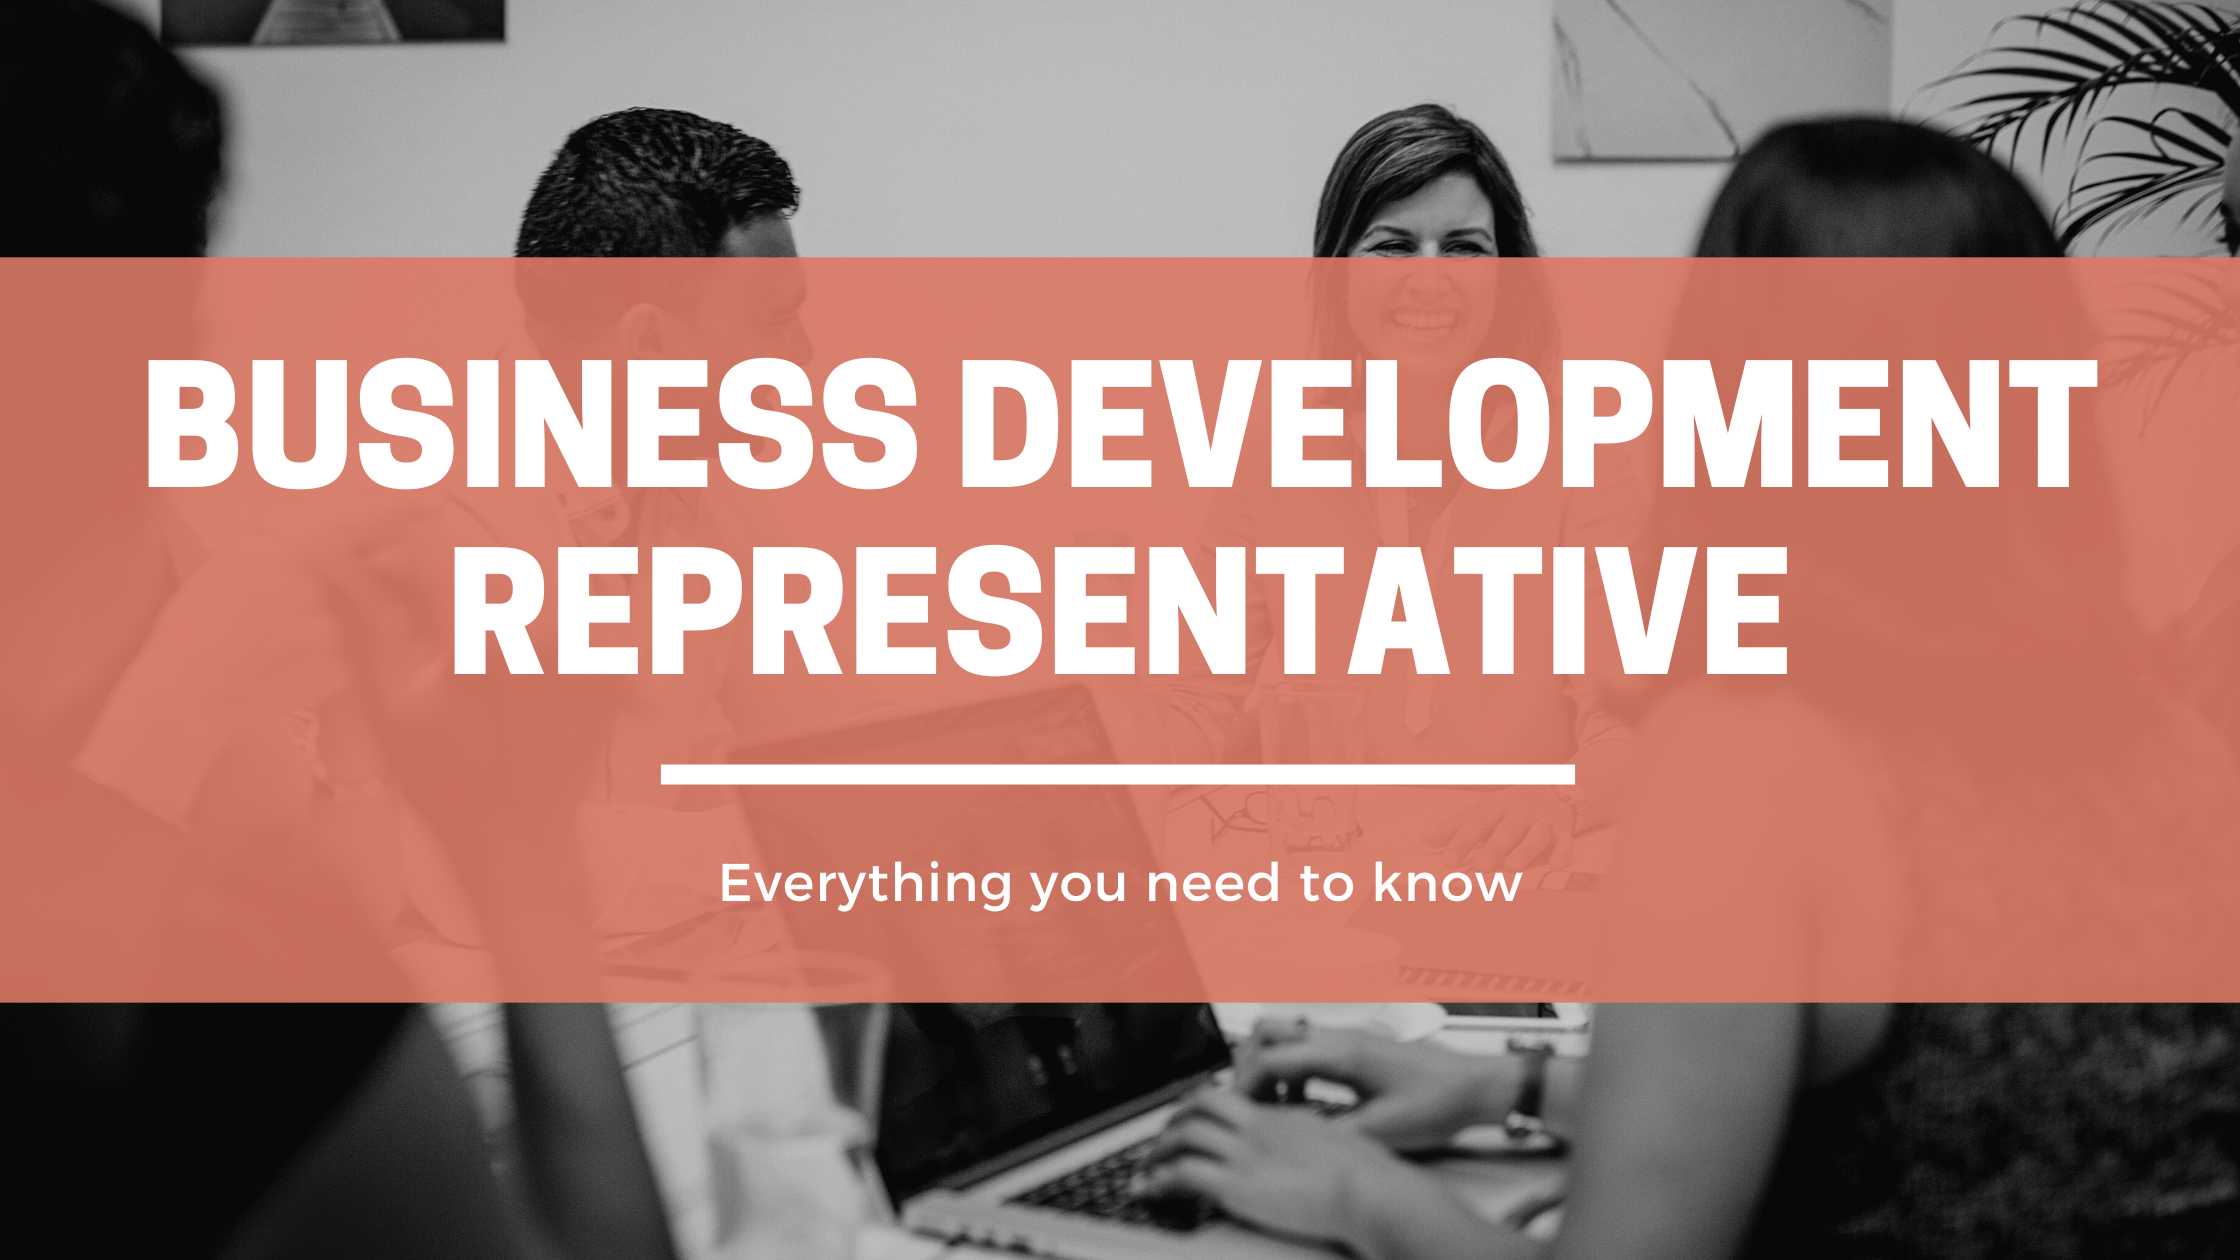 Business Development Representative header image